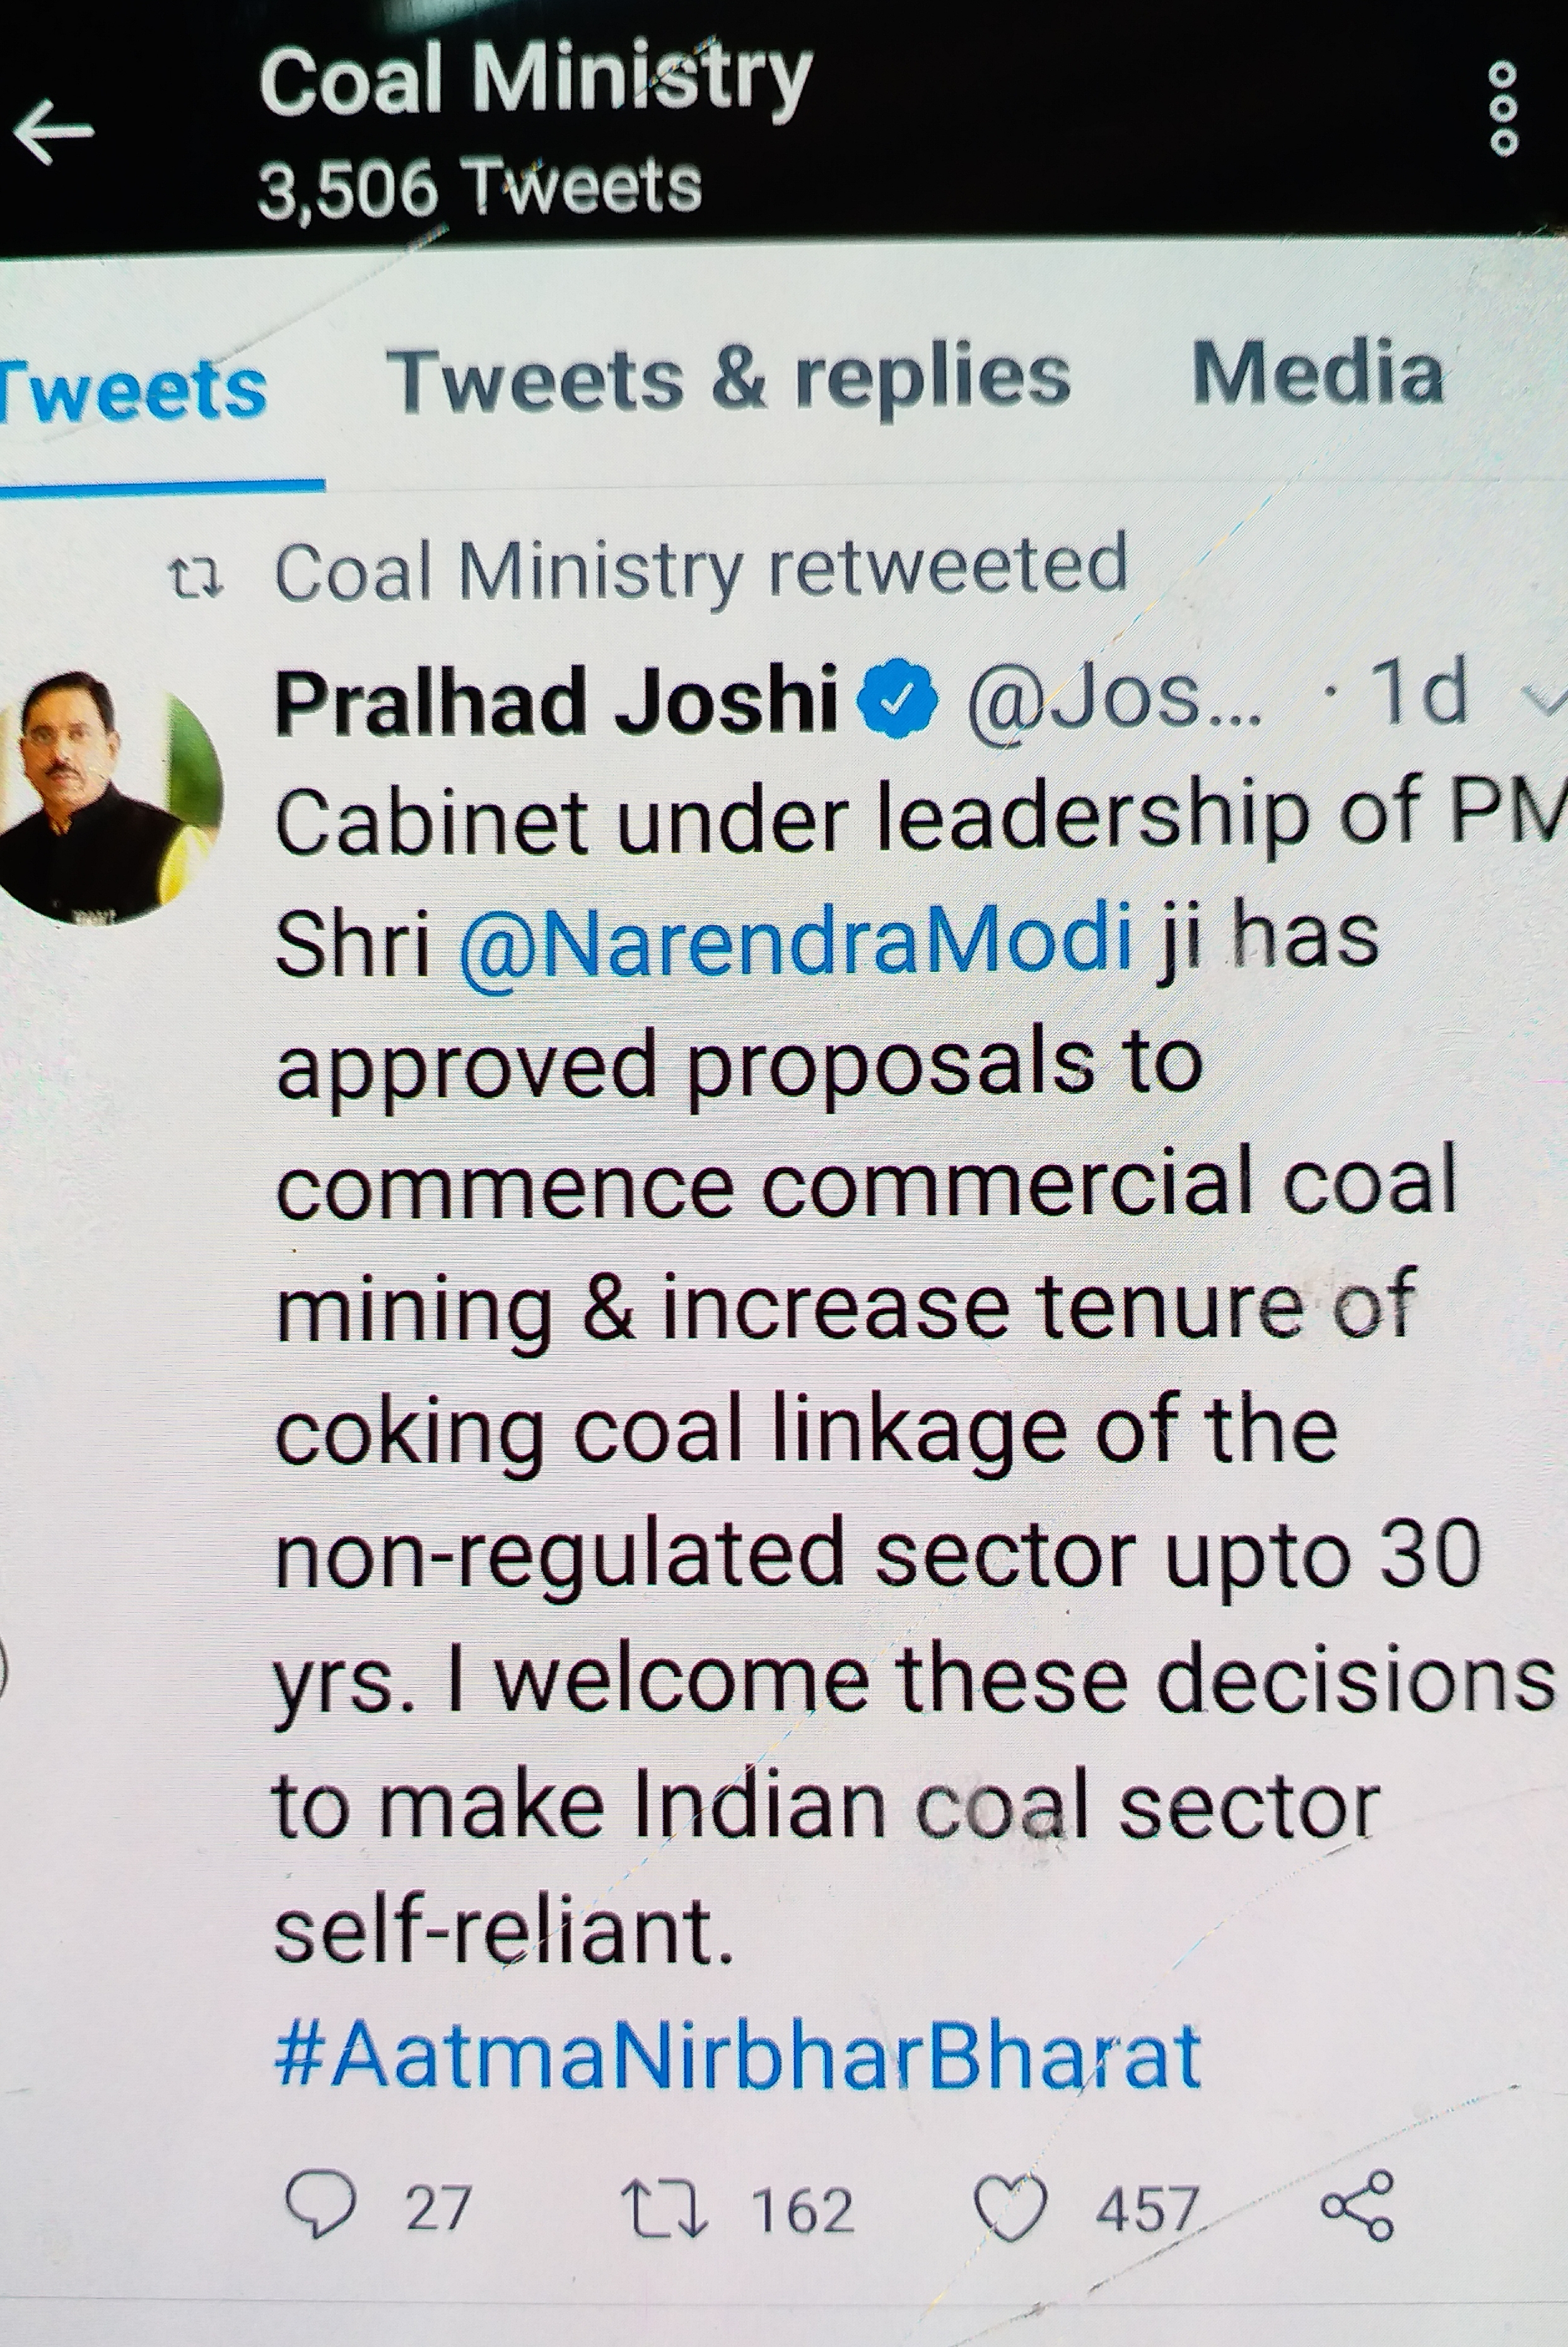 Coal Minister Prahlad Joshi tweeted